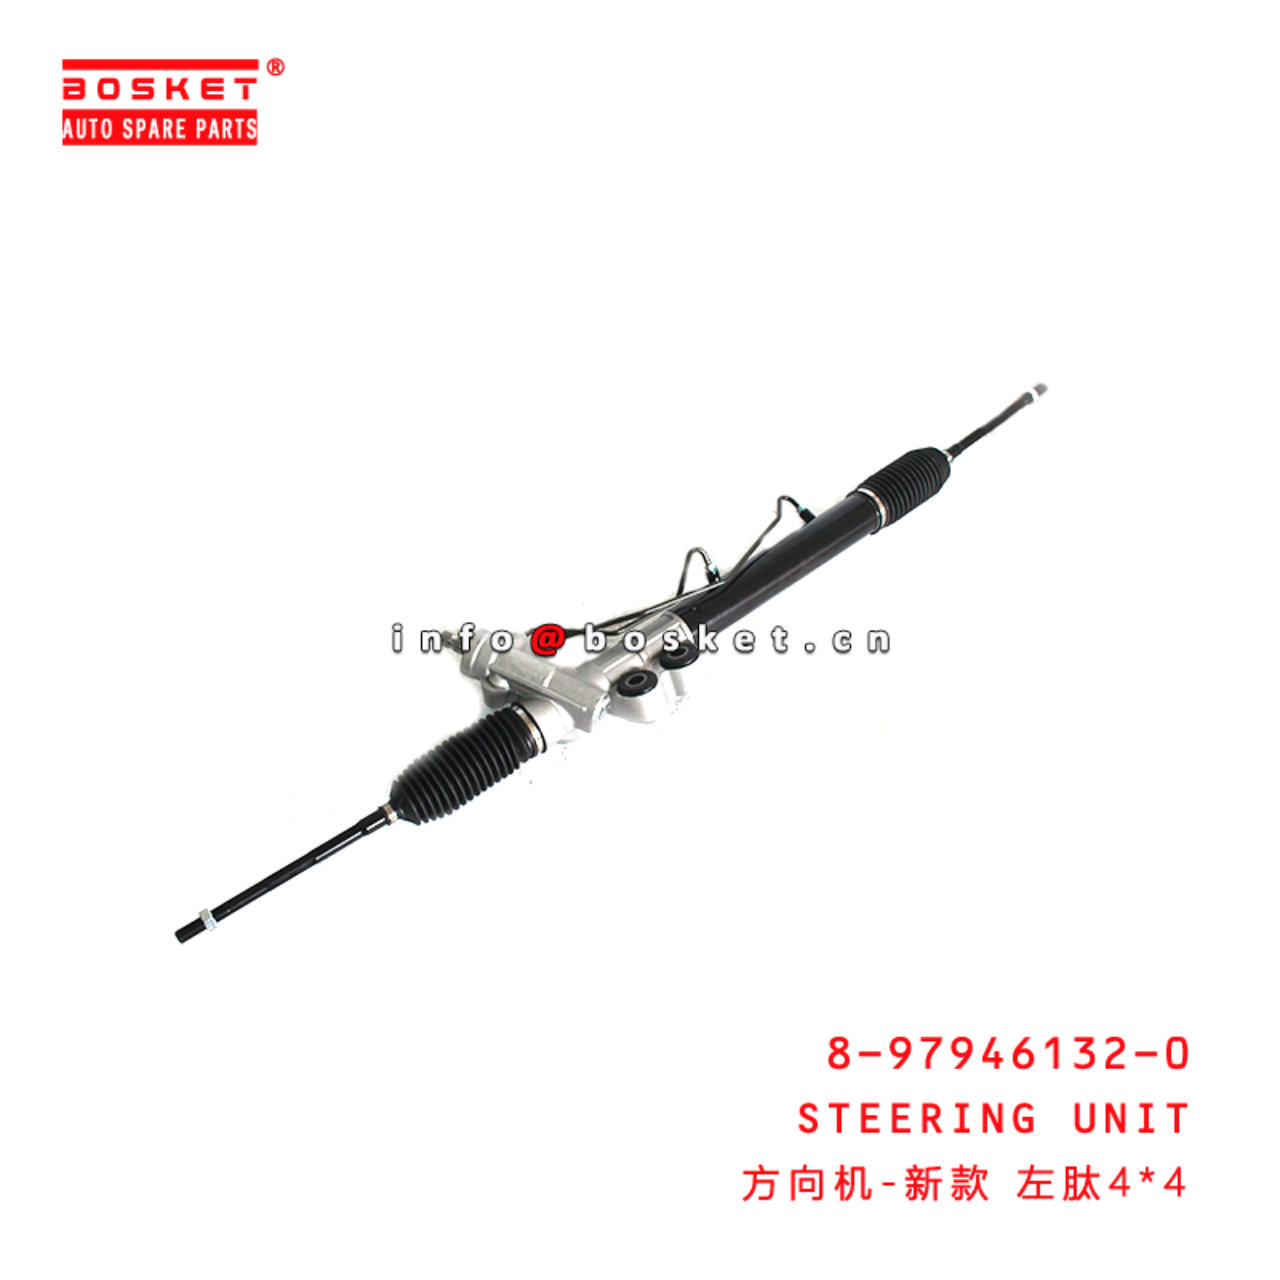 8-97946132-0 Steering Unit suitable for ISUZU DMAX 4*4 8979461320